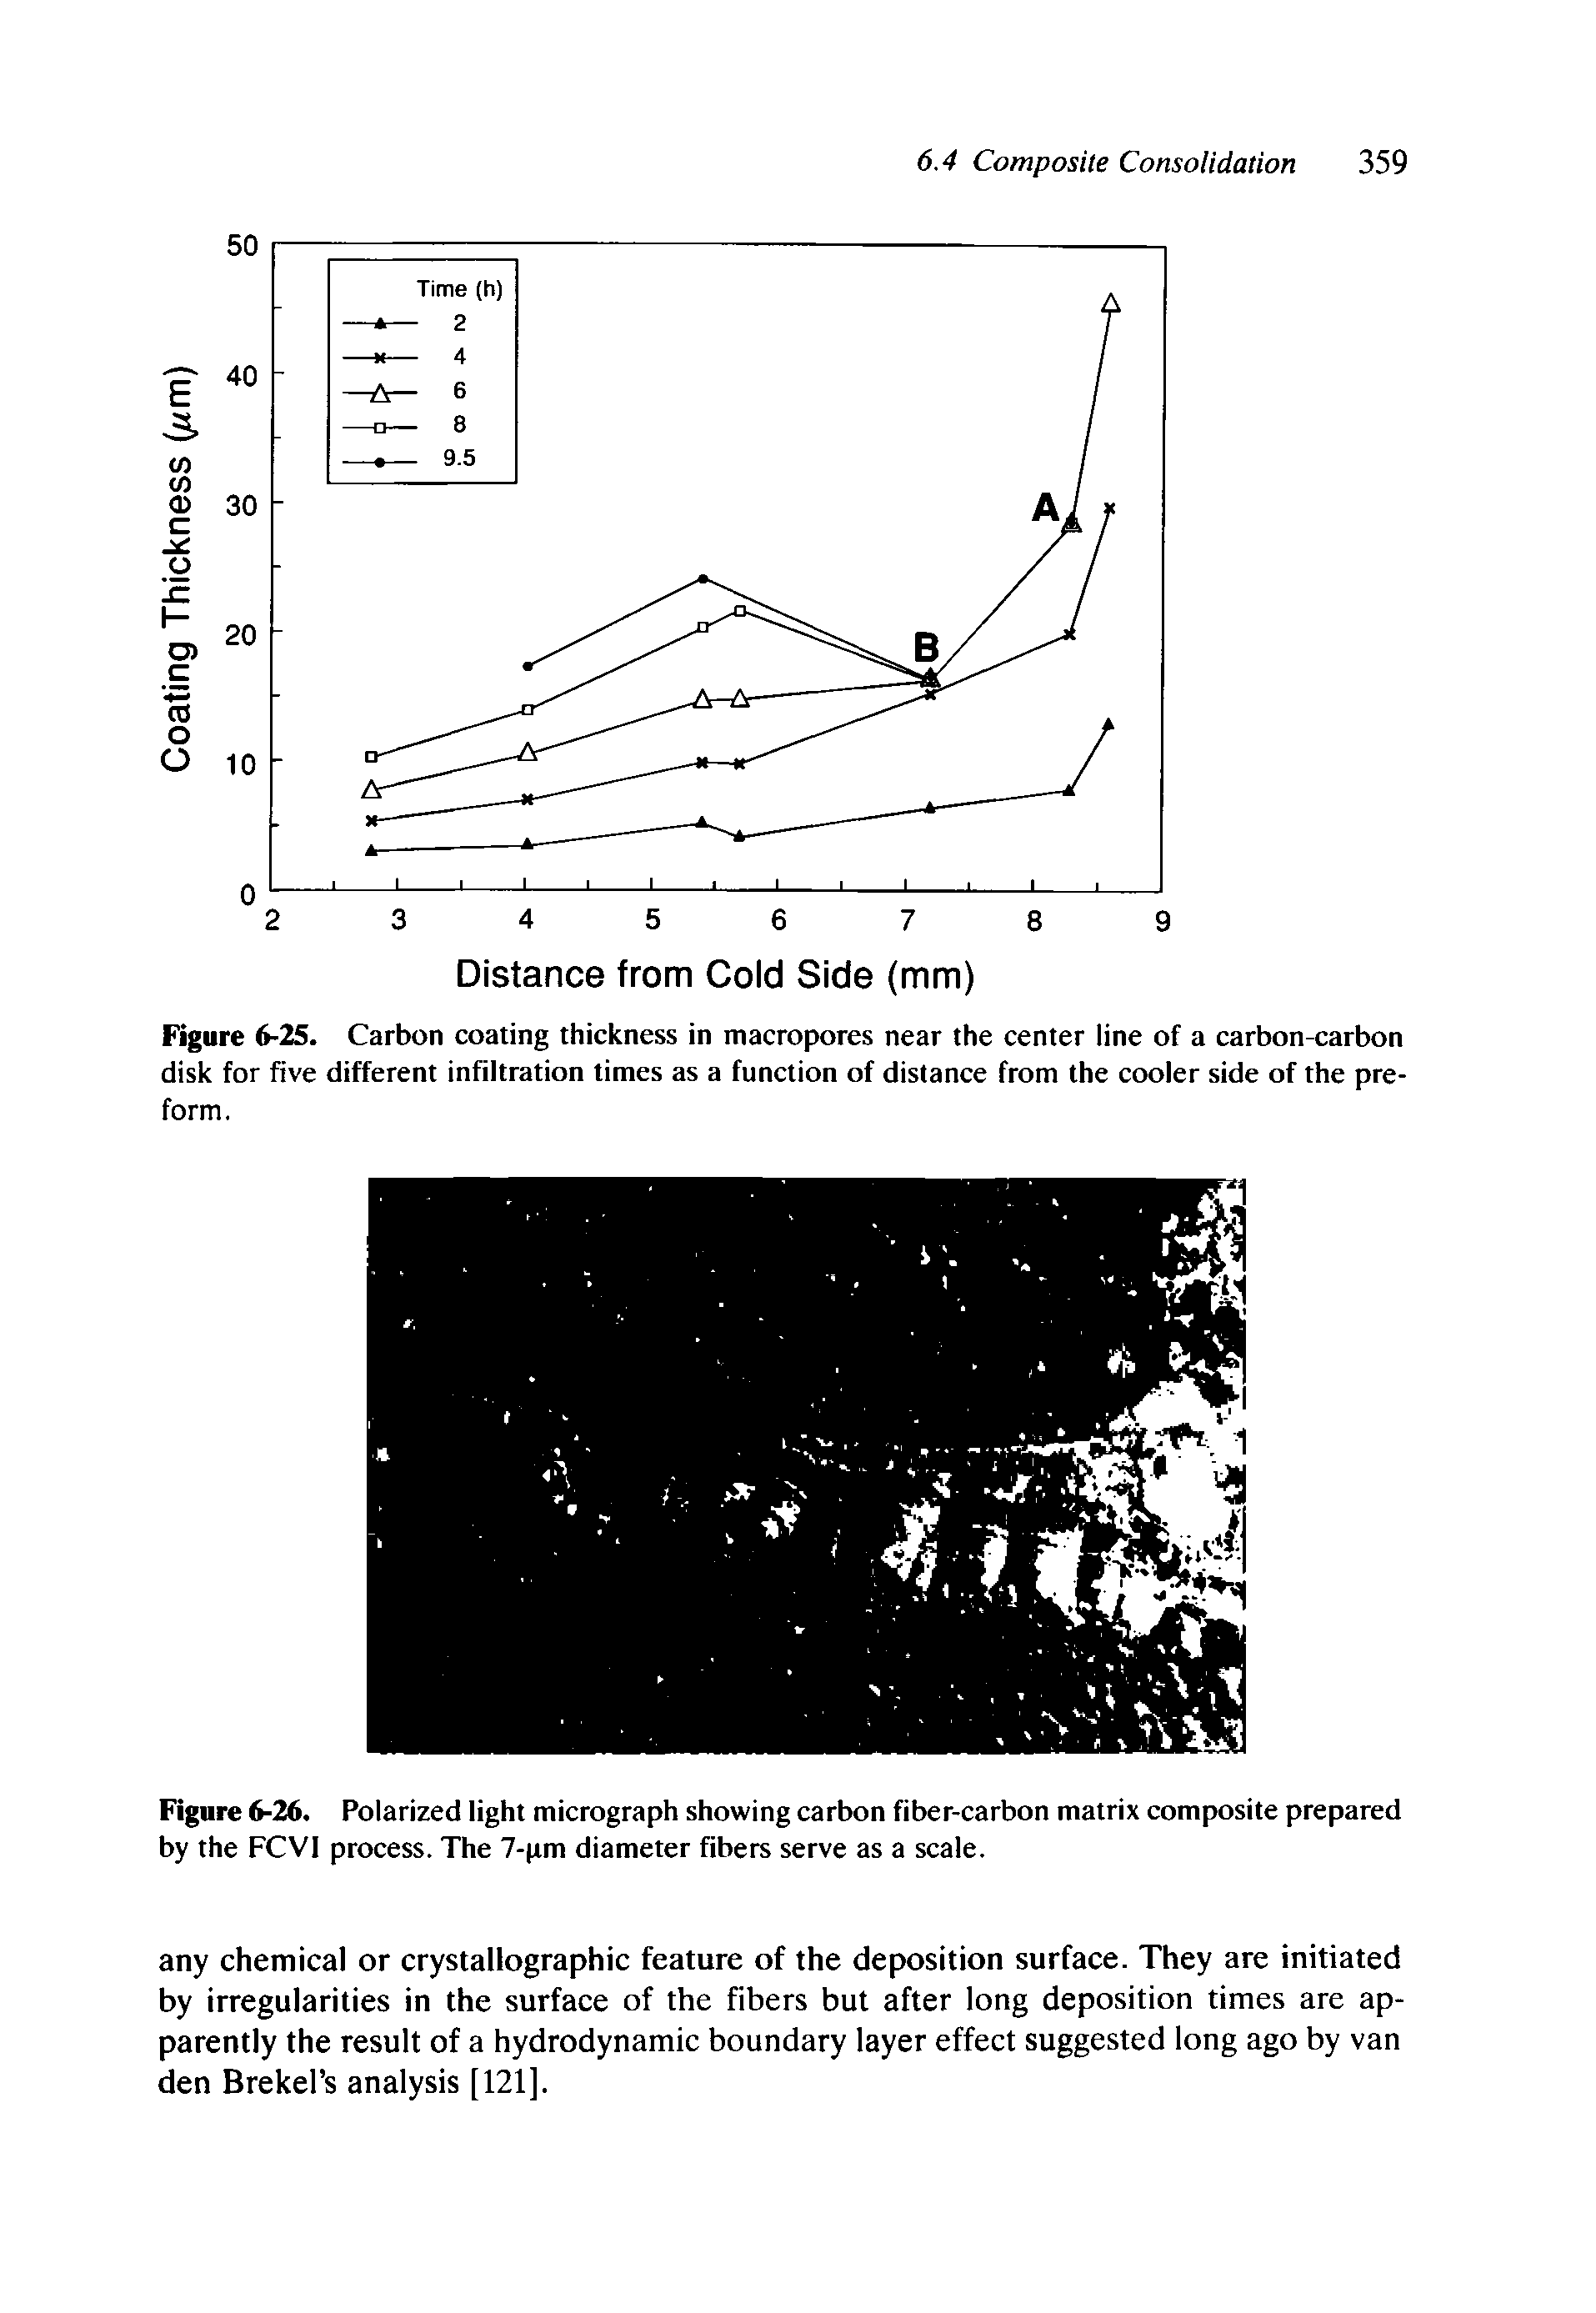 Figure 6-26. Polarized light micrograph showing carbon fiber-carbon matrix composite prepared by the FCVI process. The 7-pm diameter fibers serve as a scale.